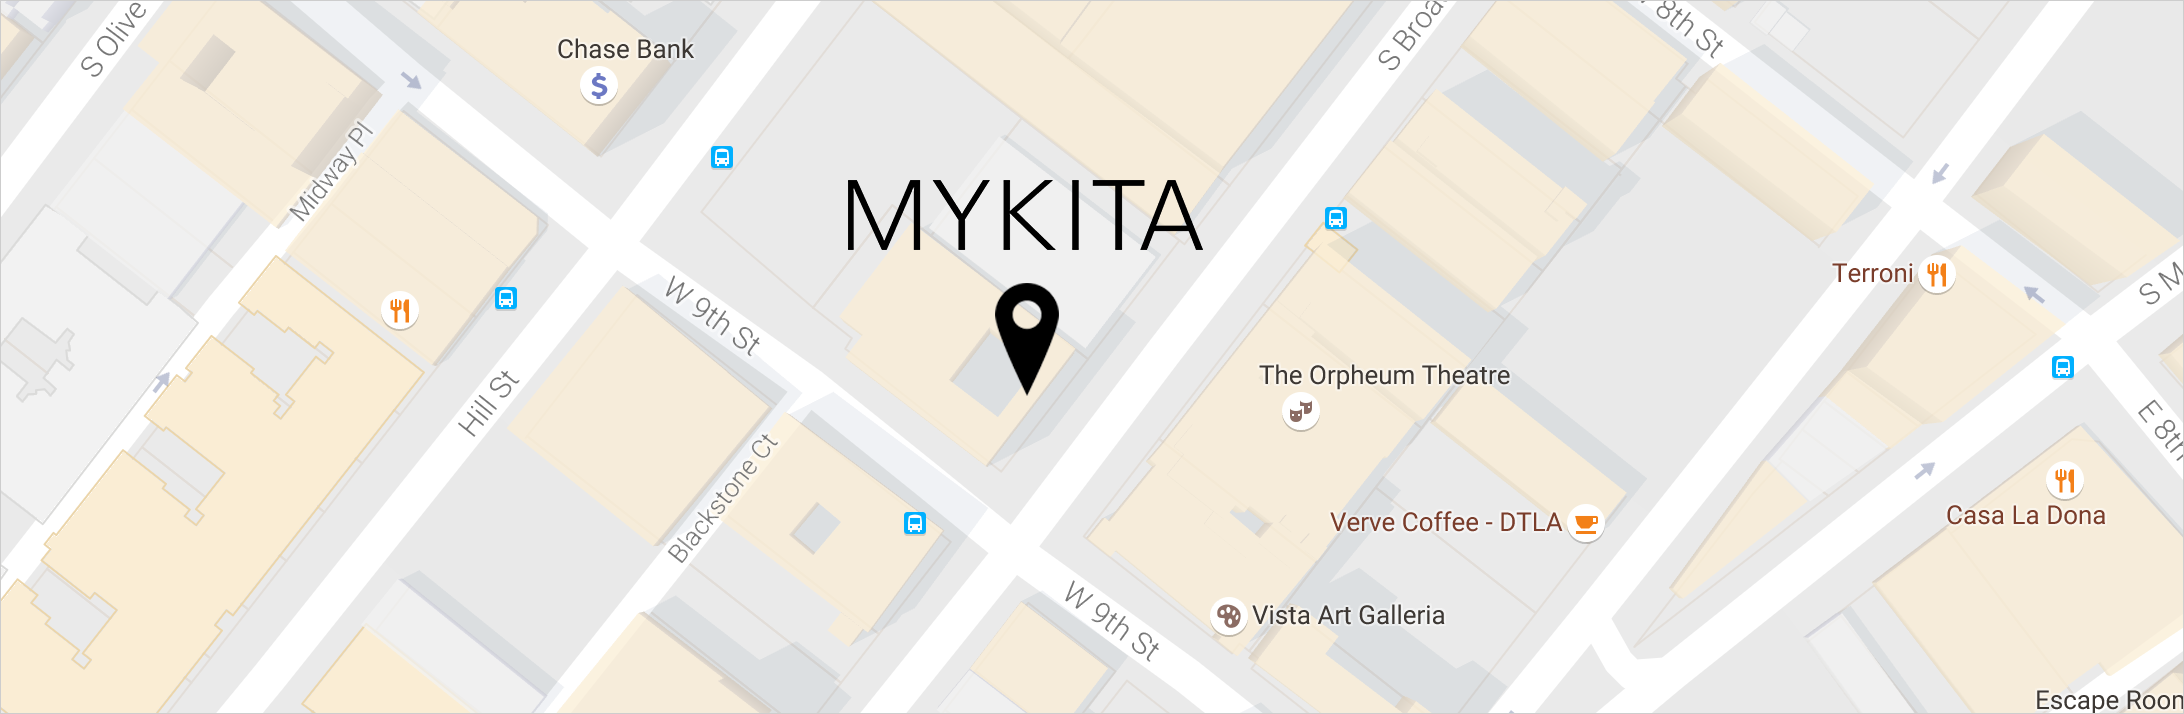 mykita-los-angeles-dtla-location